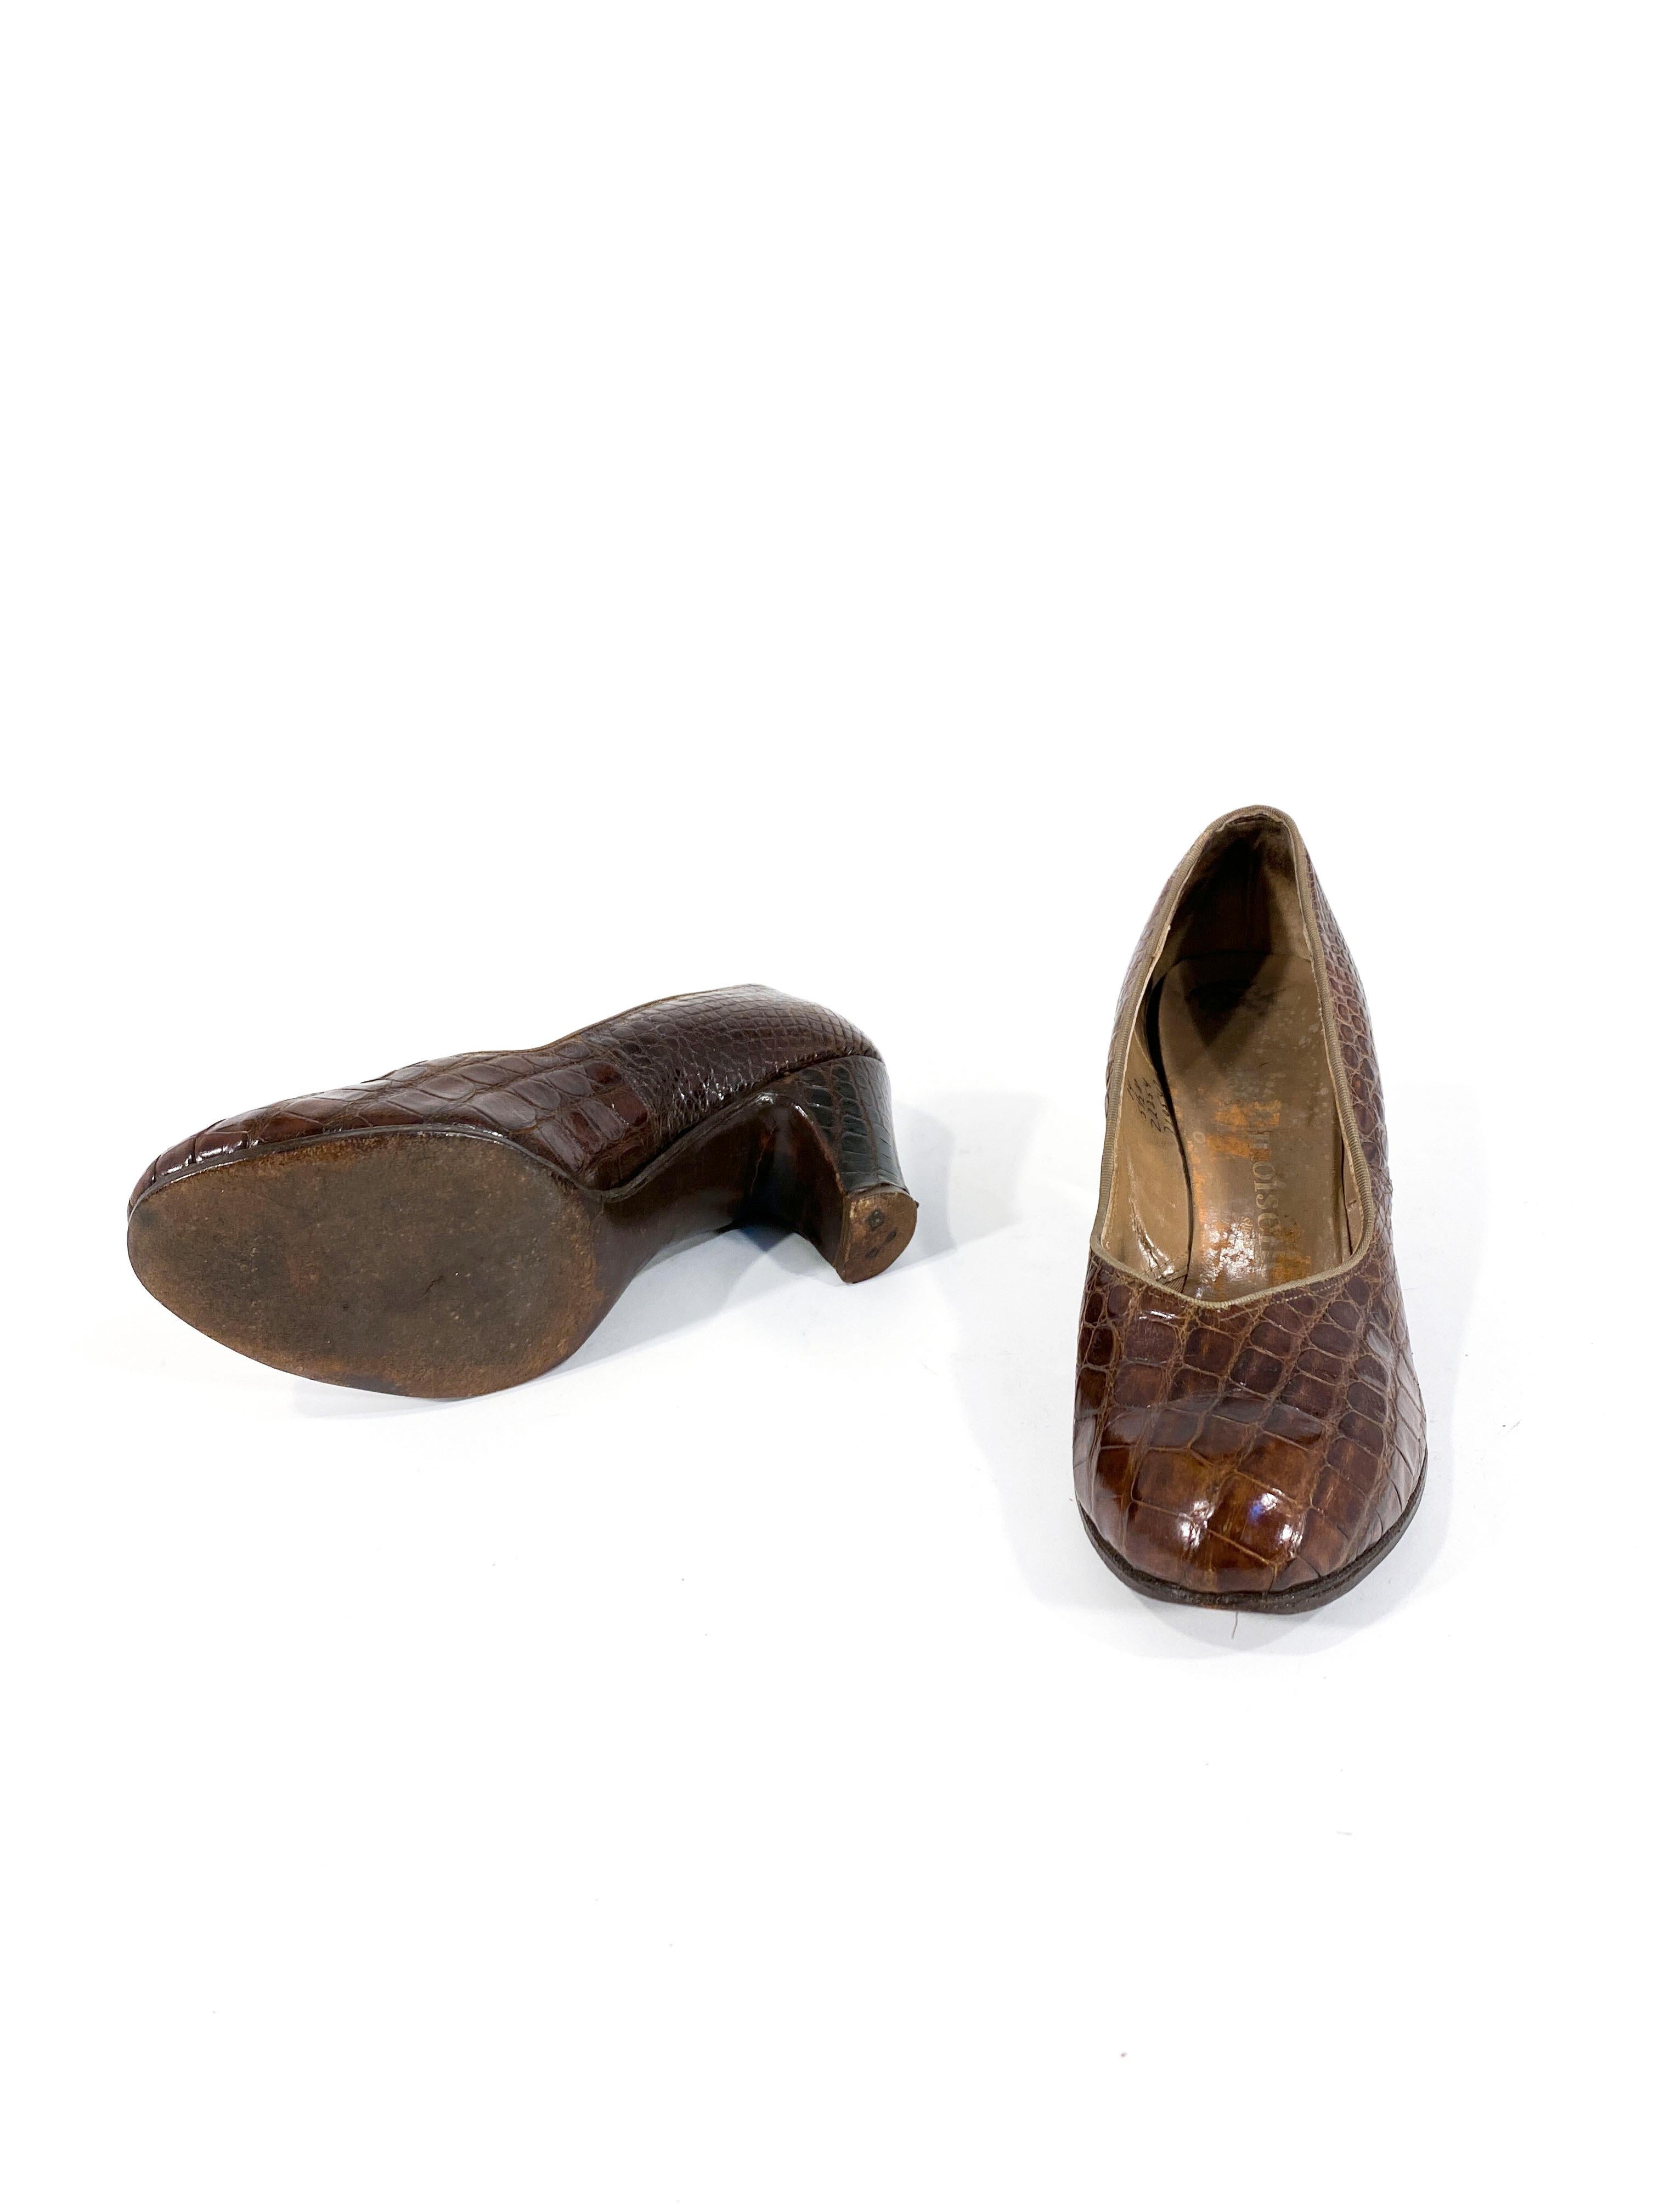 1940s Alligator Pumps For Sale at 1stDibs | 1940s pumps, 1940s dress shoes